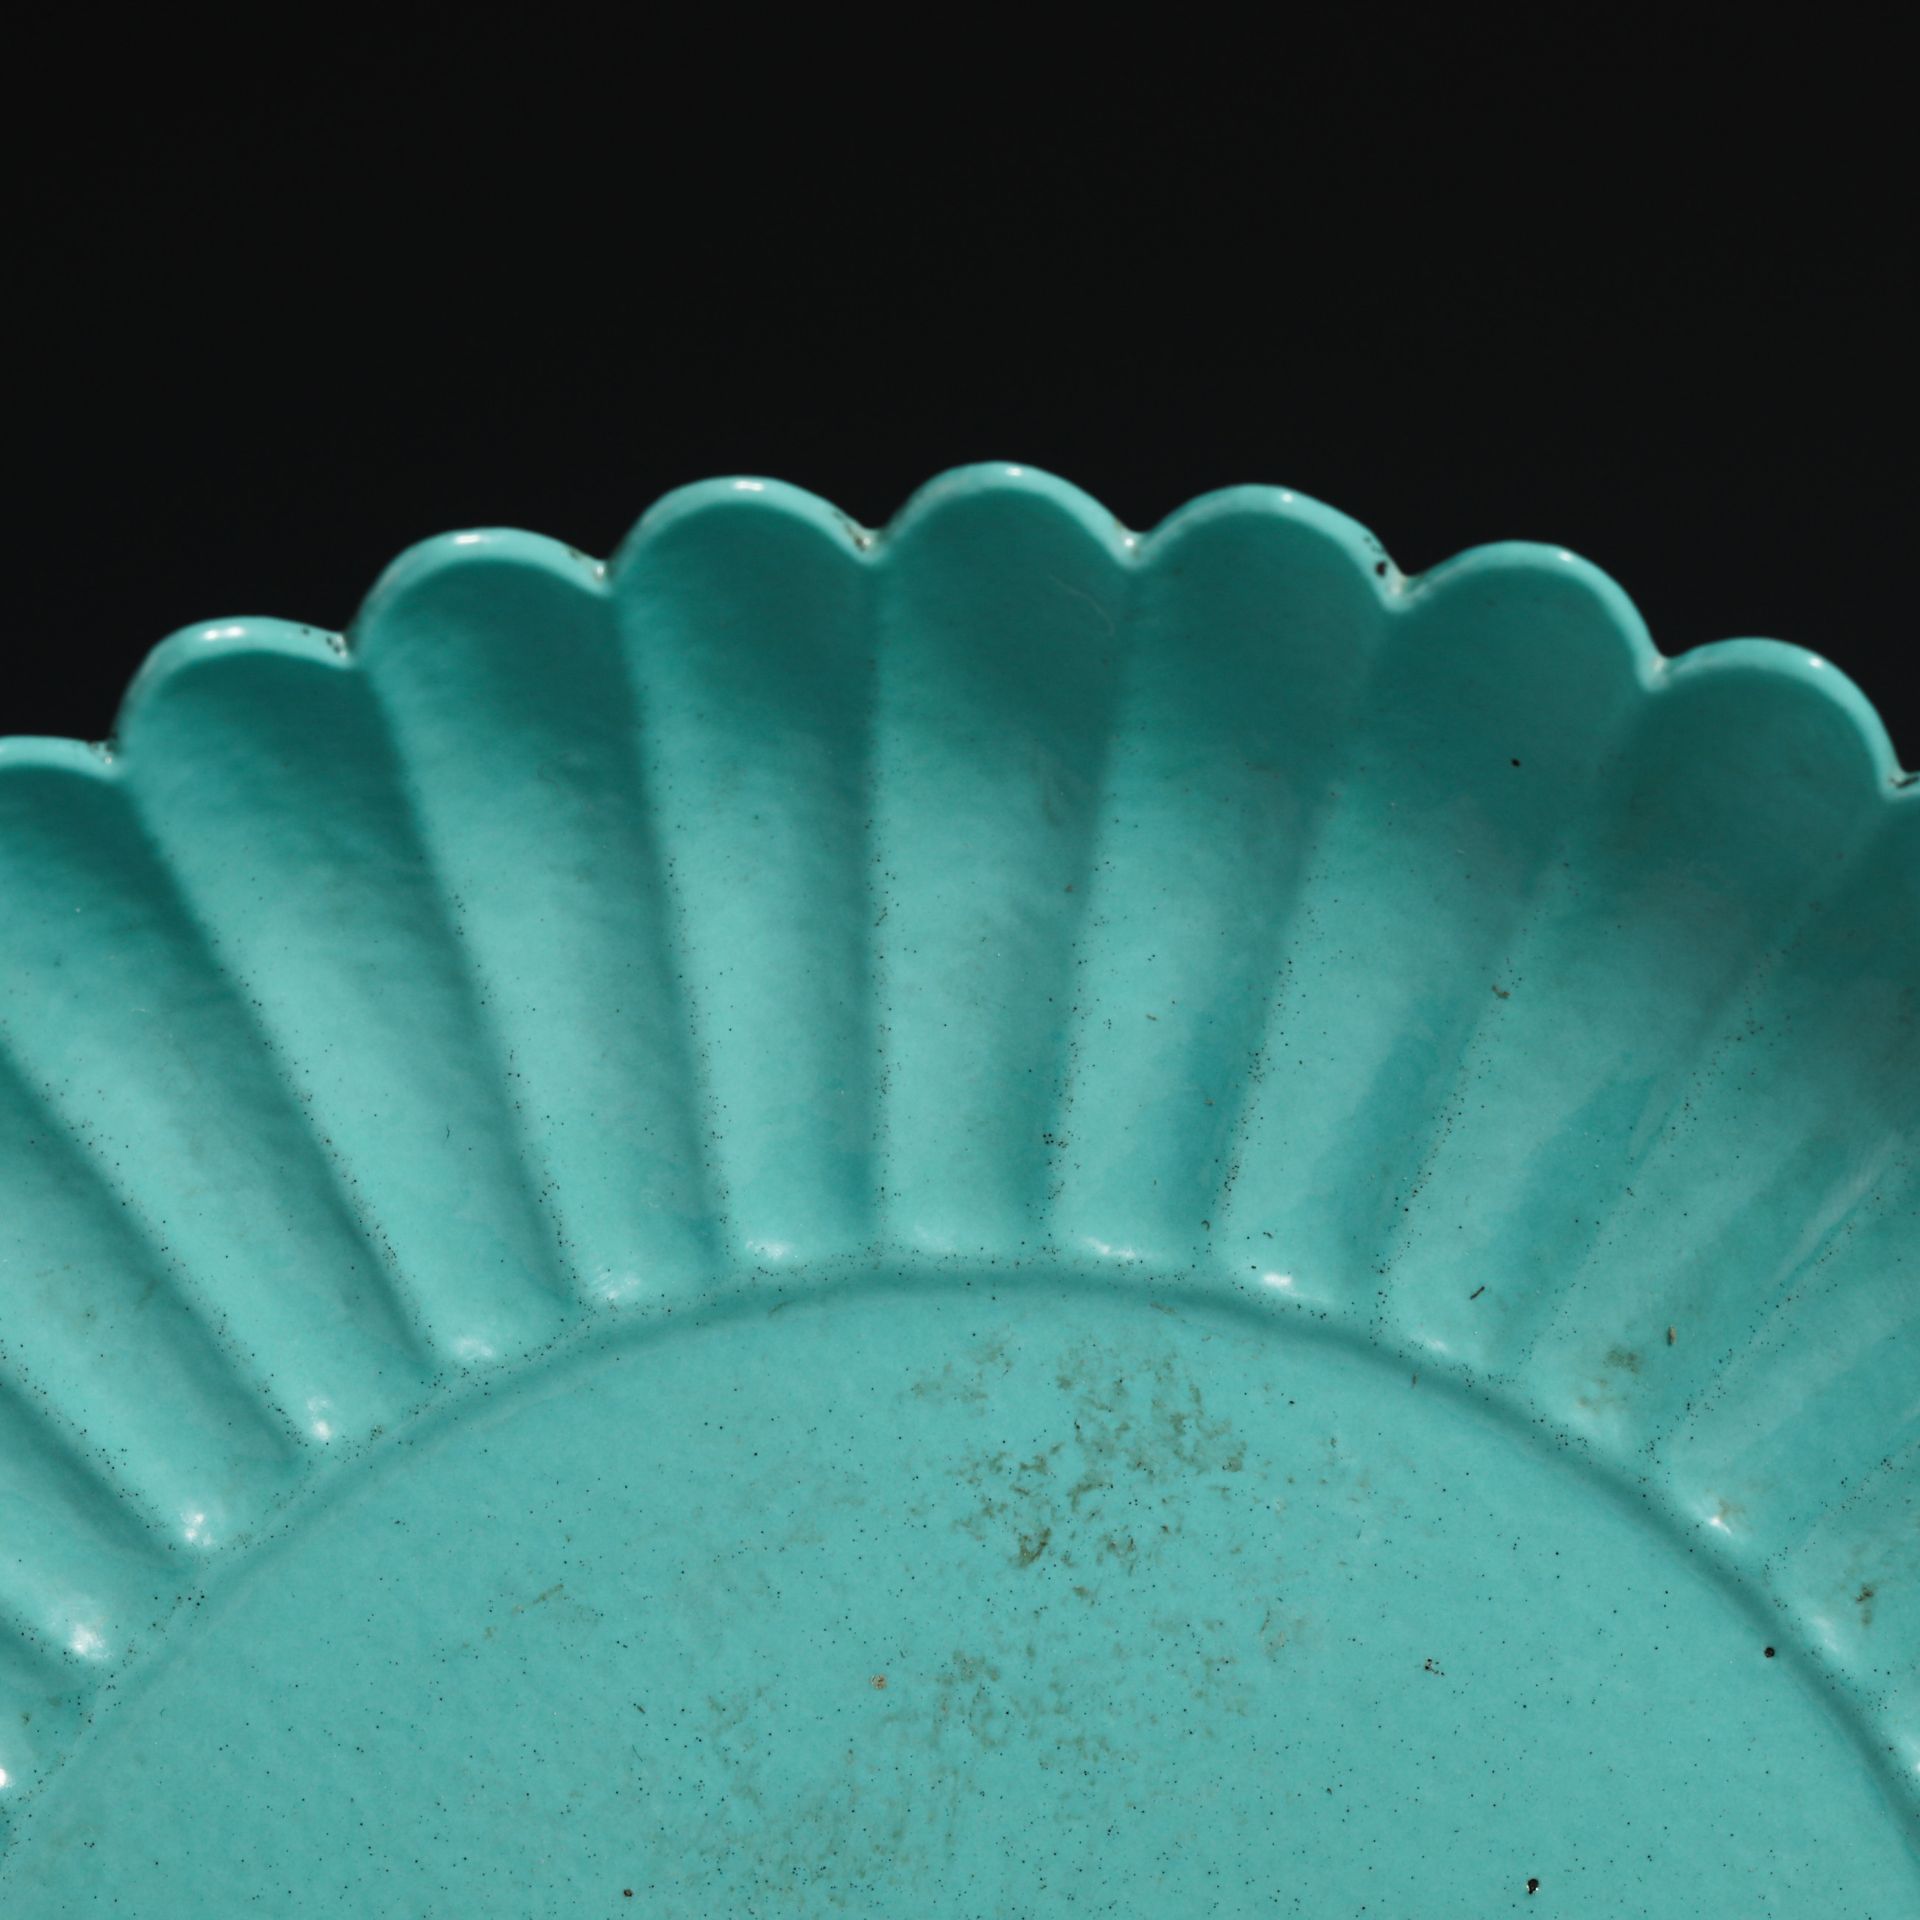 Pair of Turquoise-Glazed Plates, 18th century - Image 3 of 7